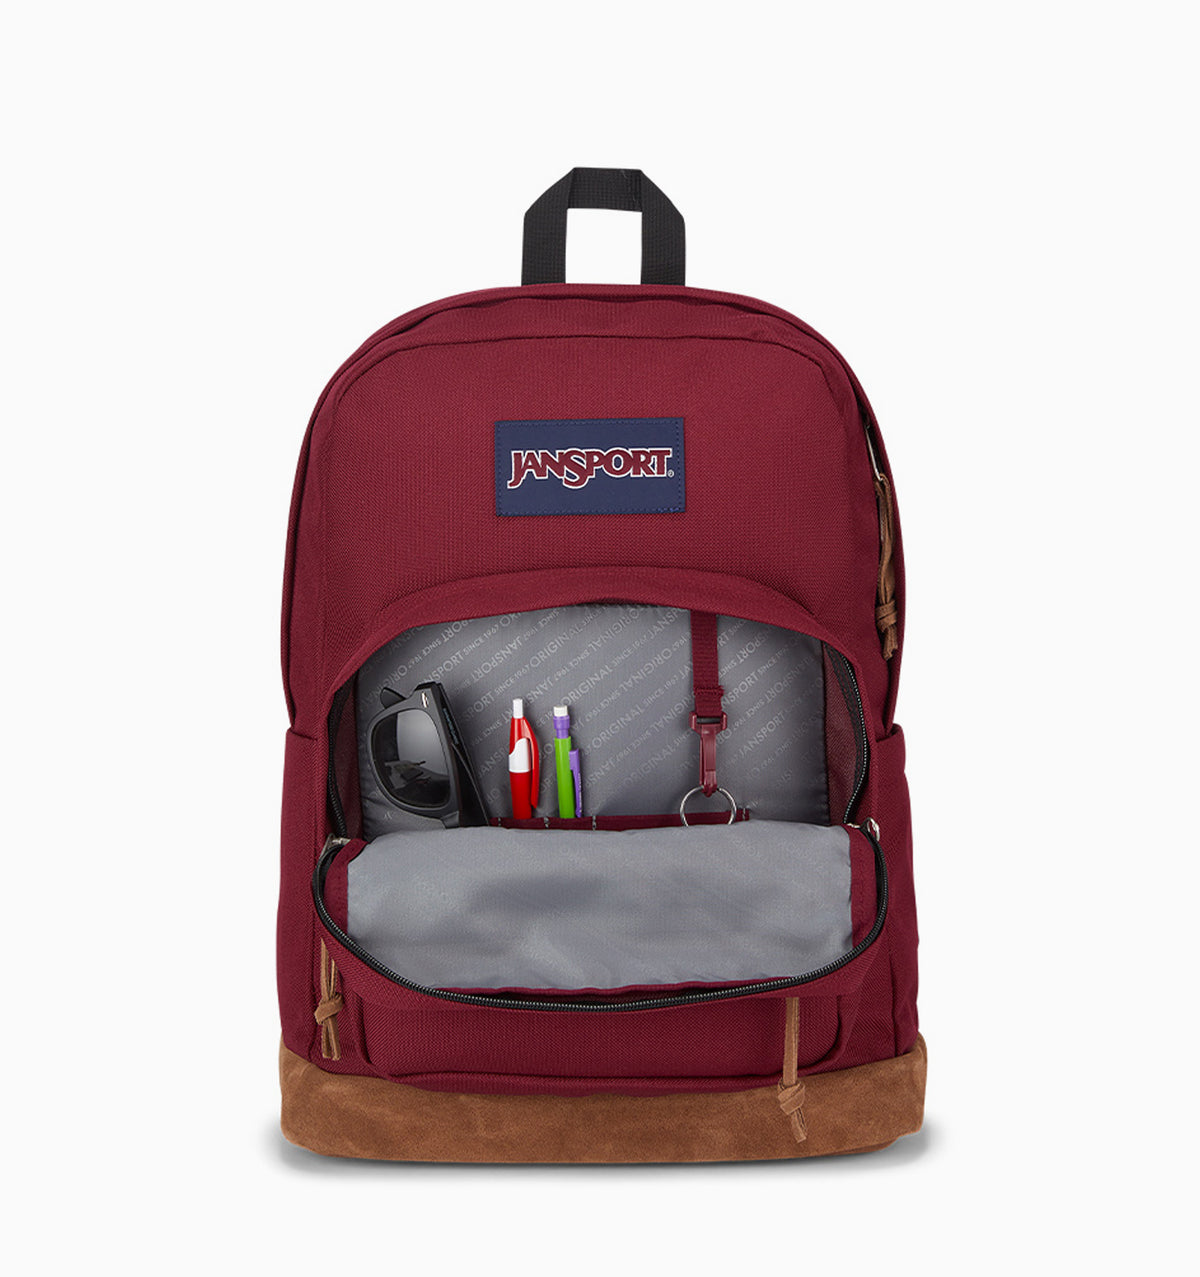 JanSport 16" Right Pack Laptop Backpack 31L - Russet Red